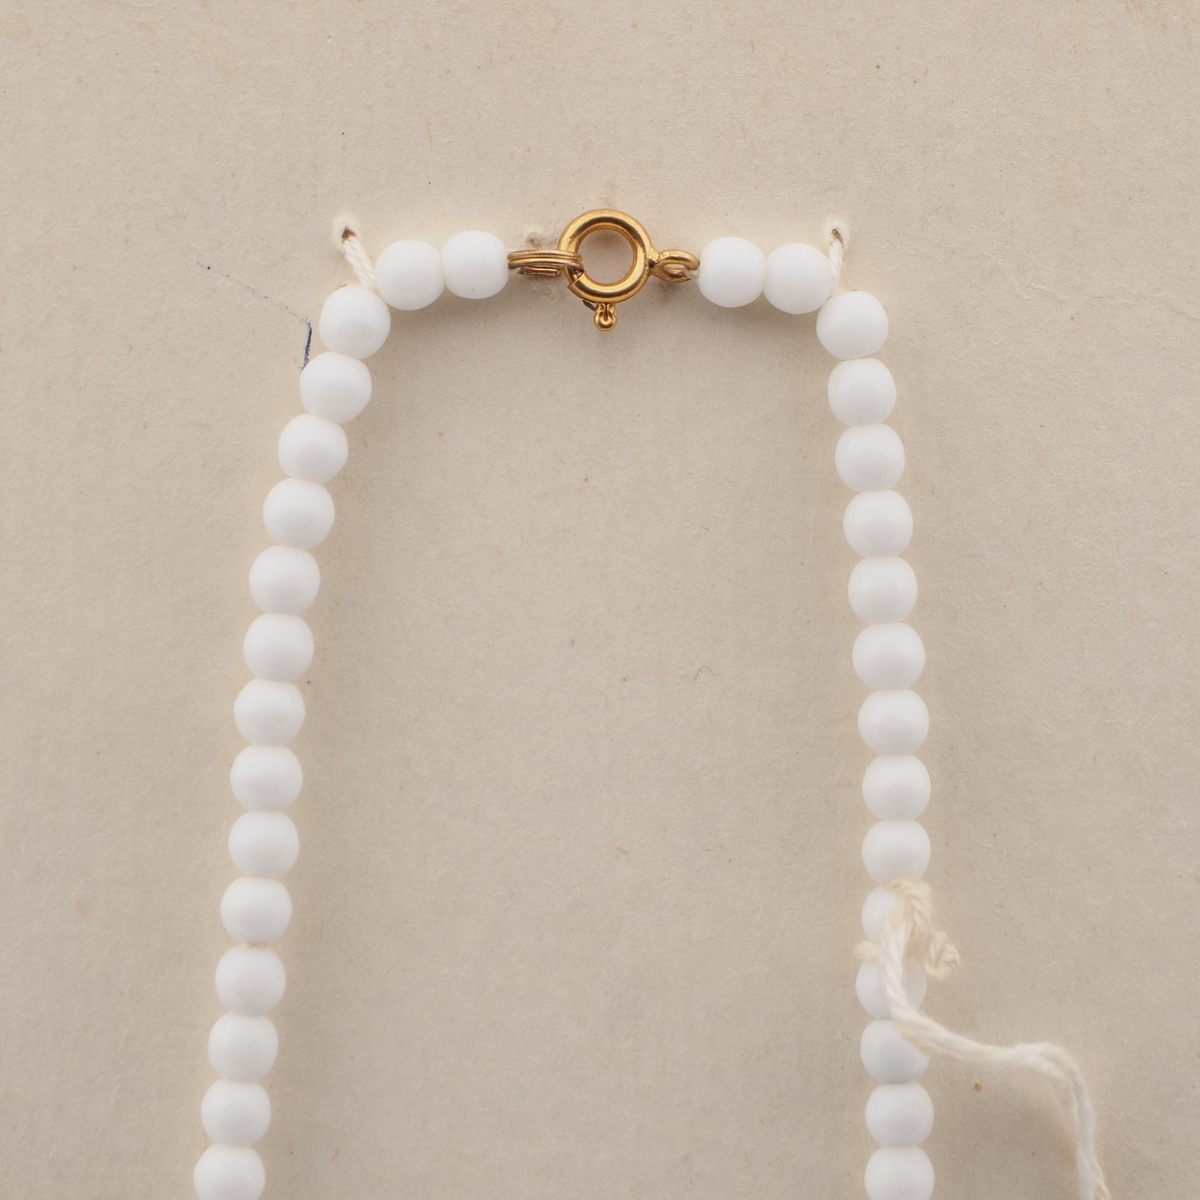 Vintage Czech necklace white round rectange twist glass beads